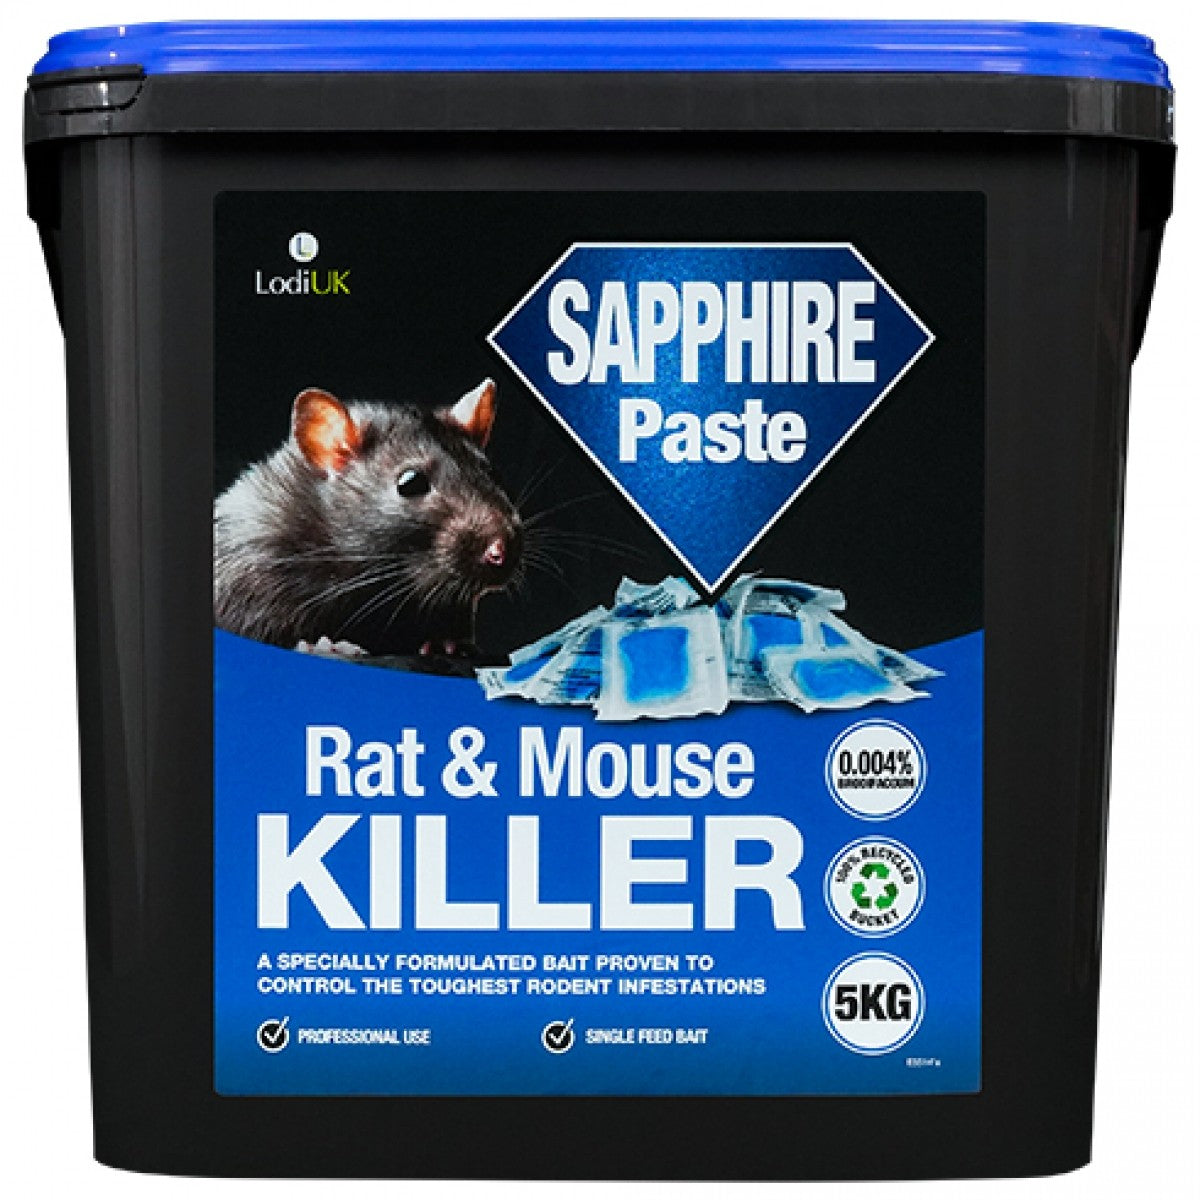 Sapphire Paste - Rat & Mouse Killer - 5kg (500x10gm sachets) Professional Use Only